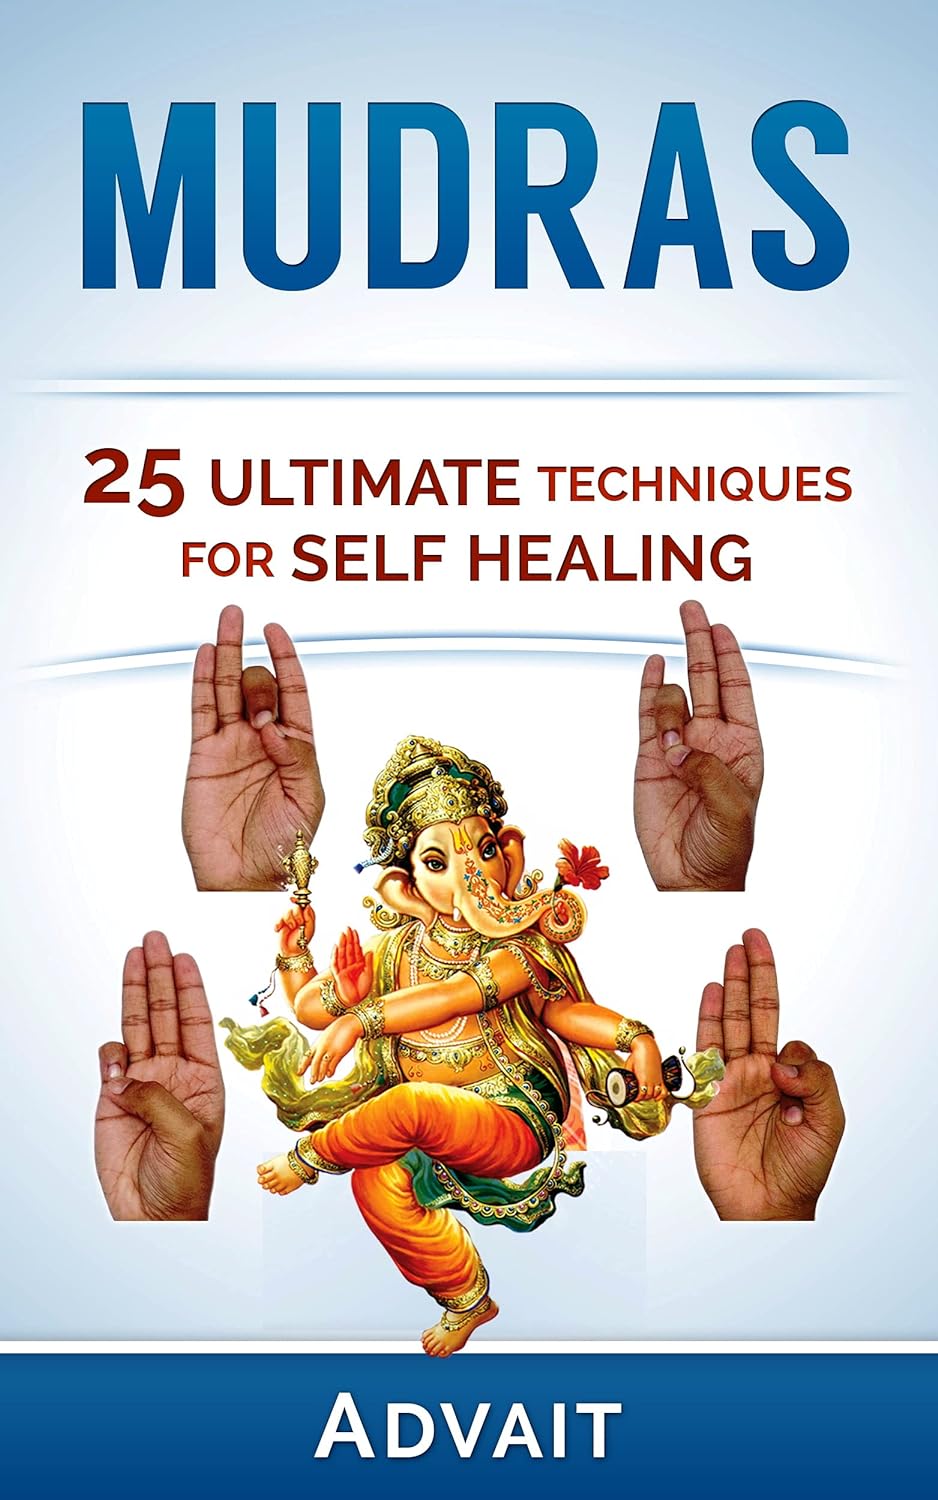 Mudras-25 Ultimate Techniques for Self Healing-Advait-Stumbit Mudras